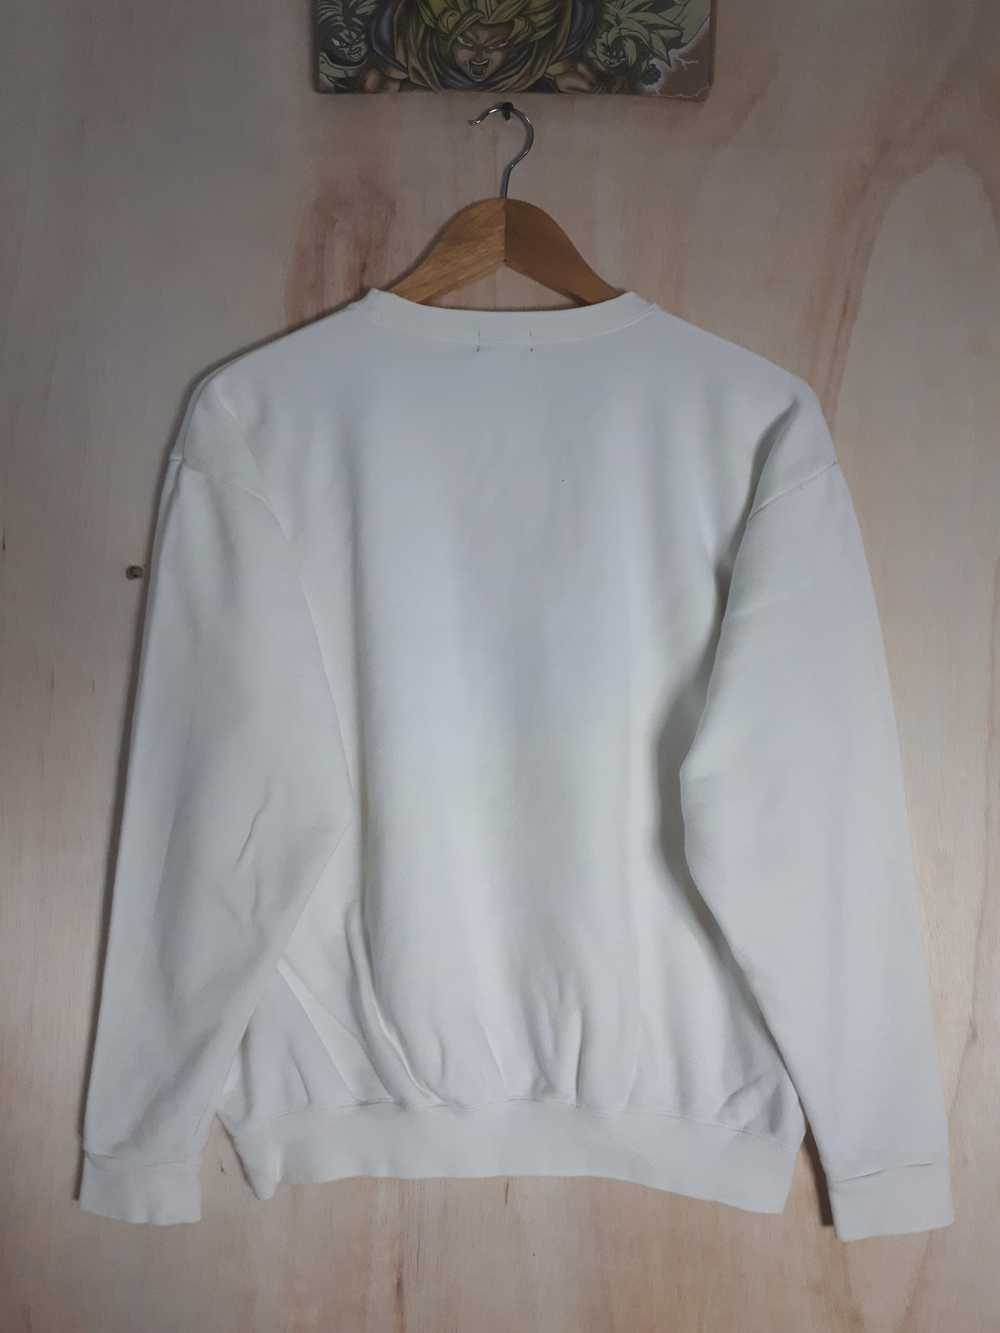 Other × Vintage Vintage Elle Paris Sweatshirt - image 2